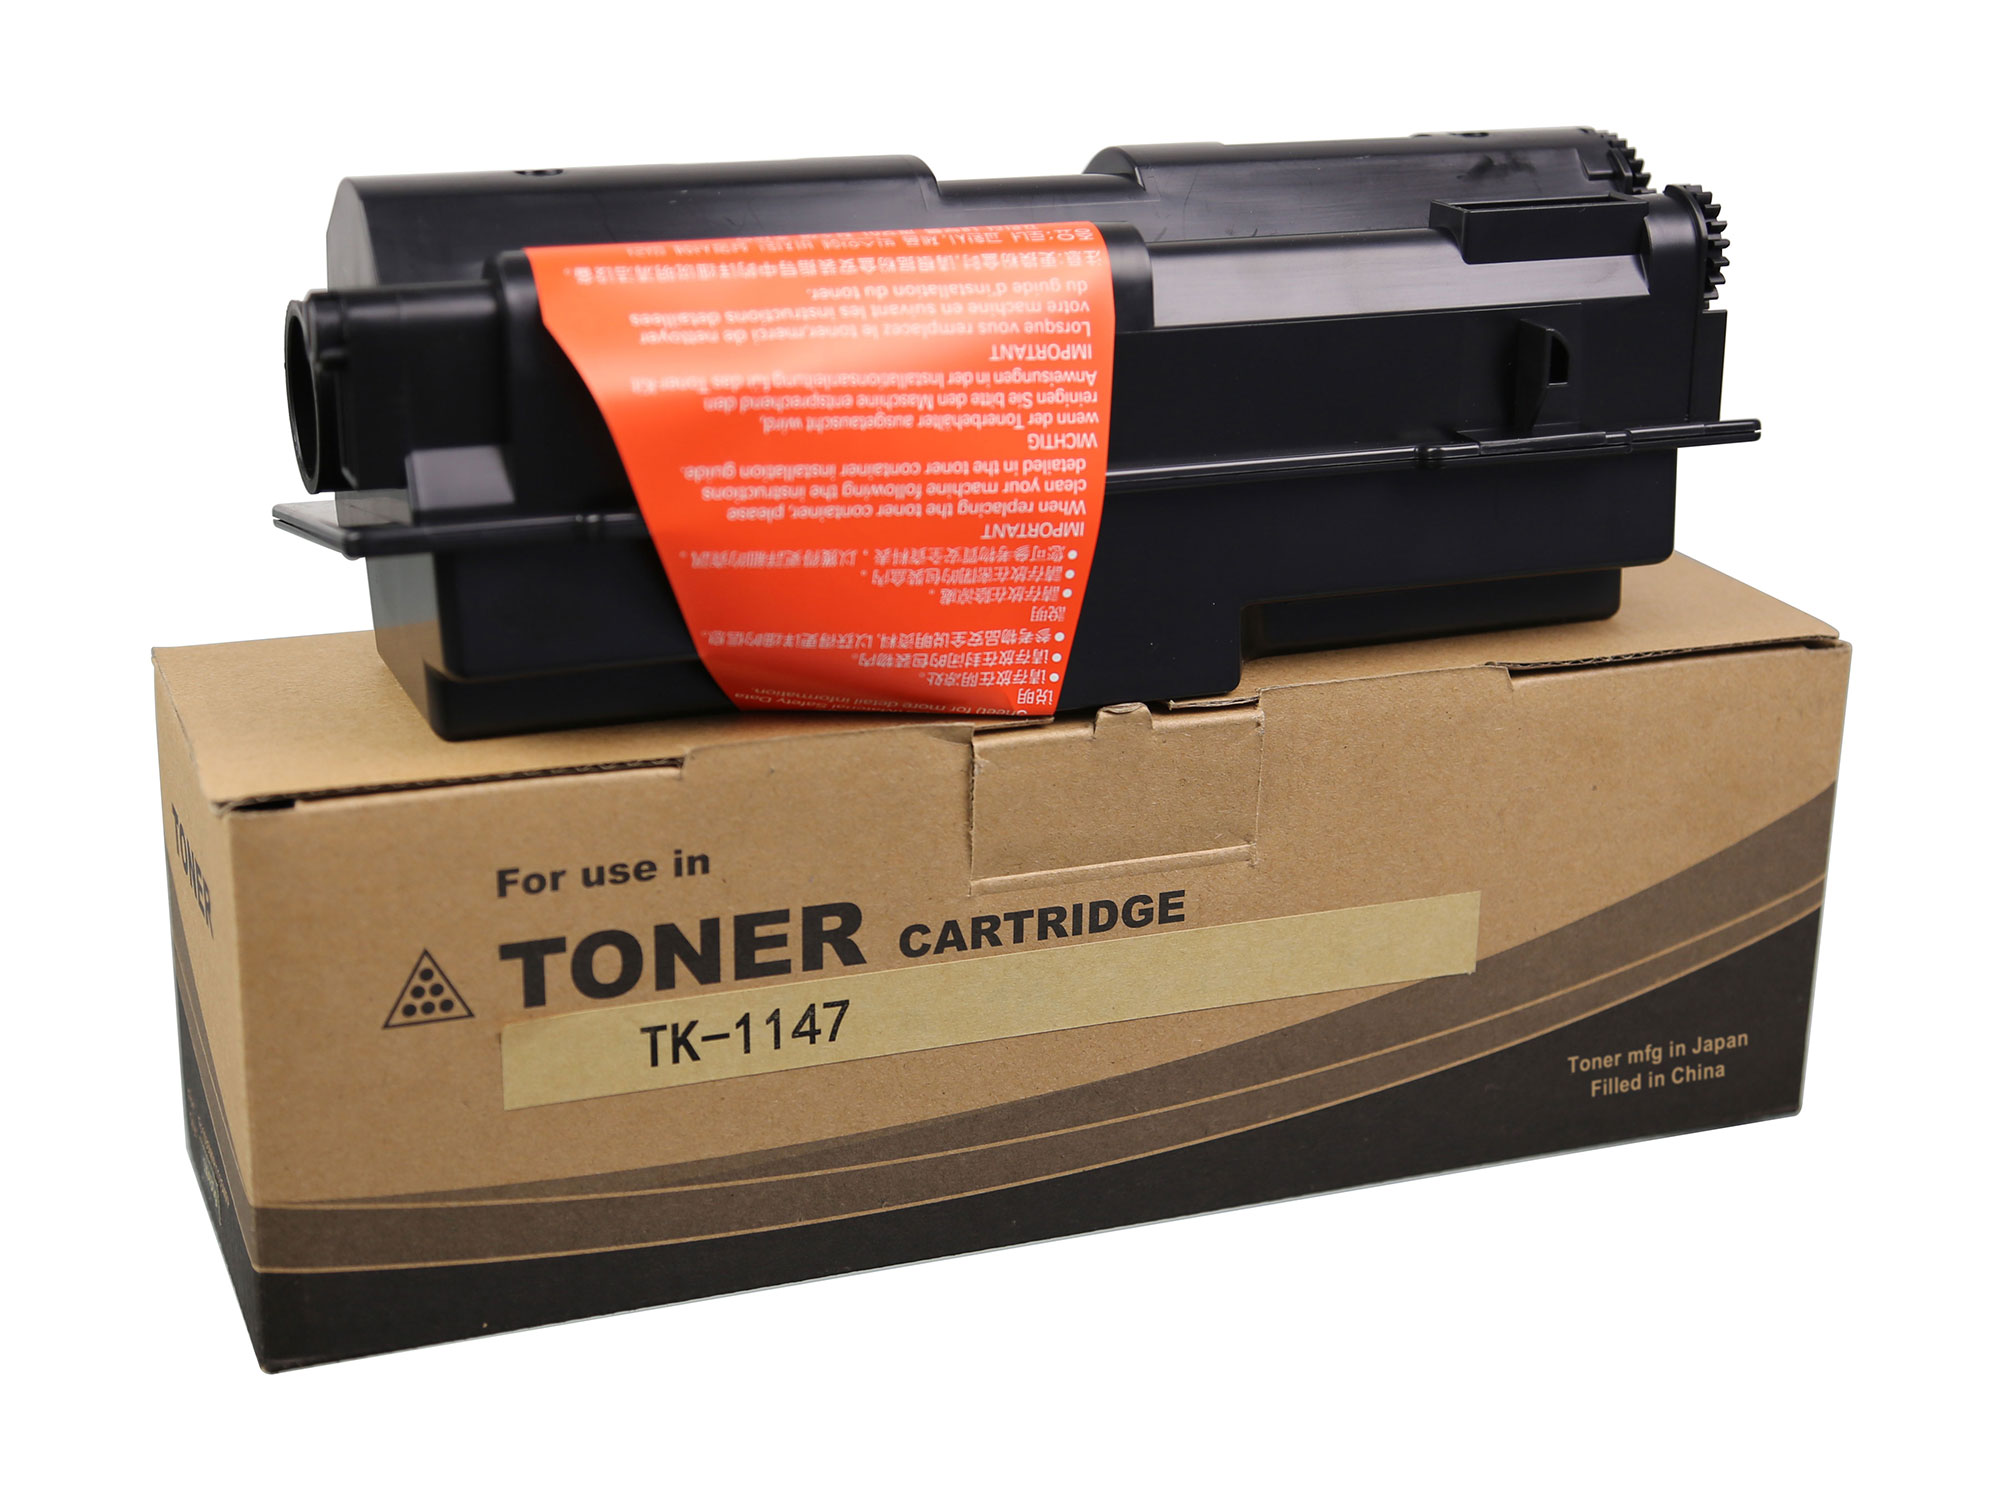 TK-1147 Toner Cartridge for Kyocera FS-1035MFP